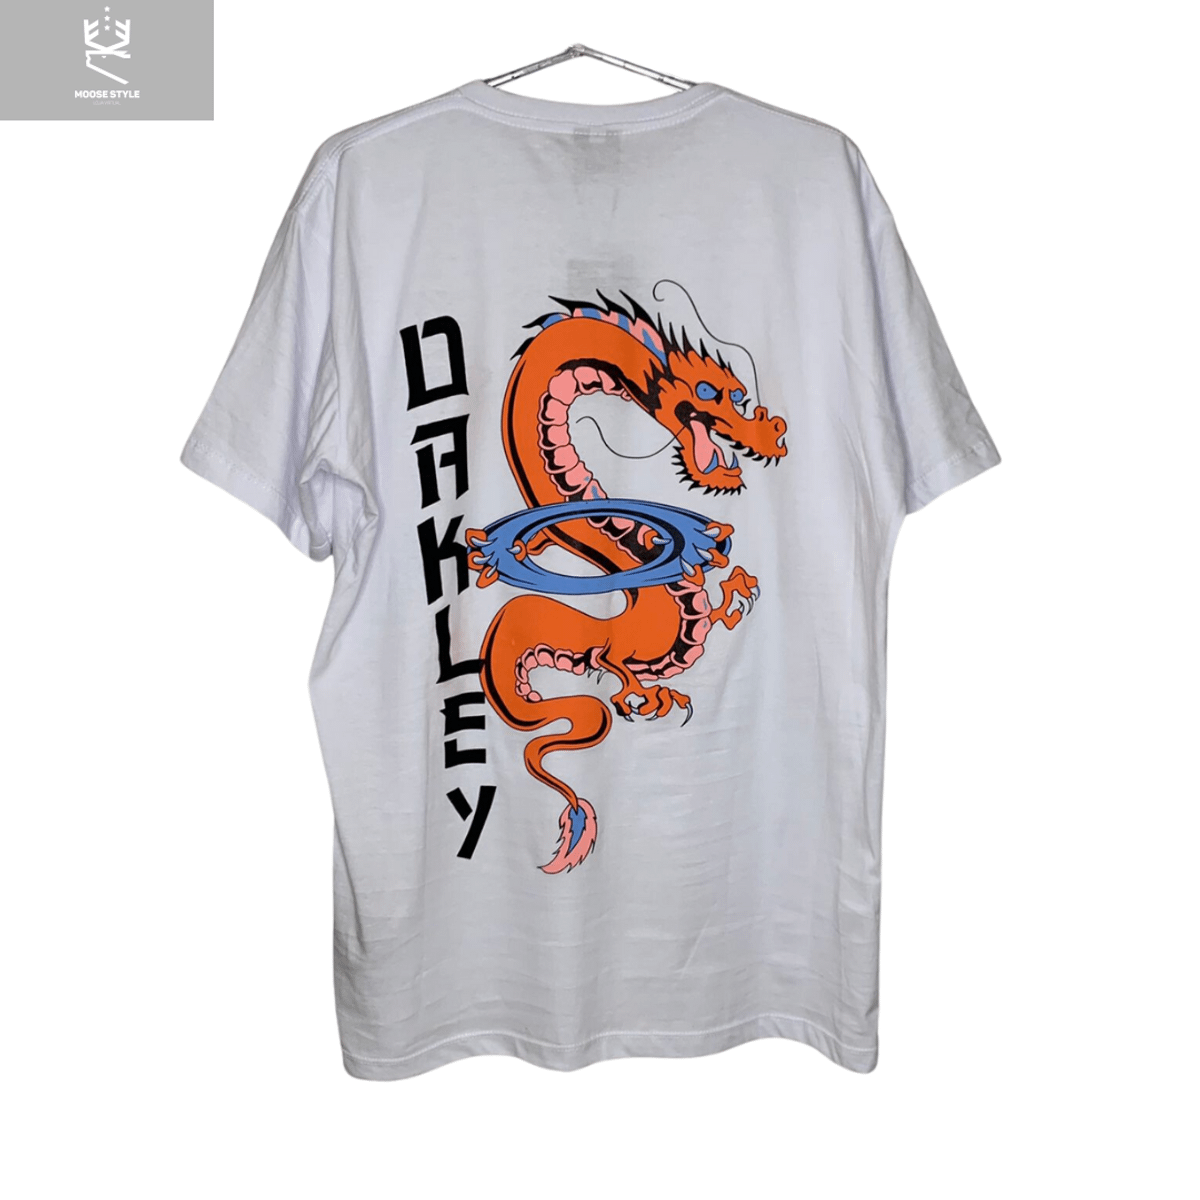 Camiseta Oakley The Dragon Tattoo 458065br-100